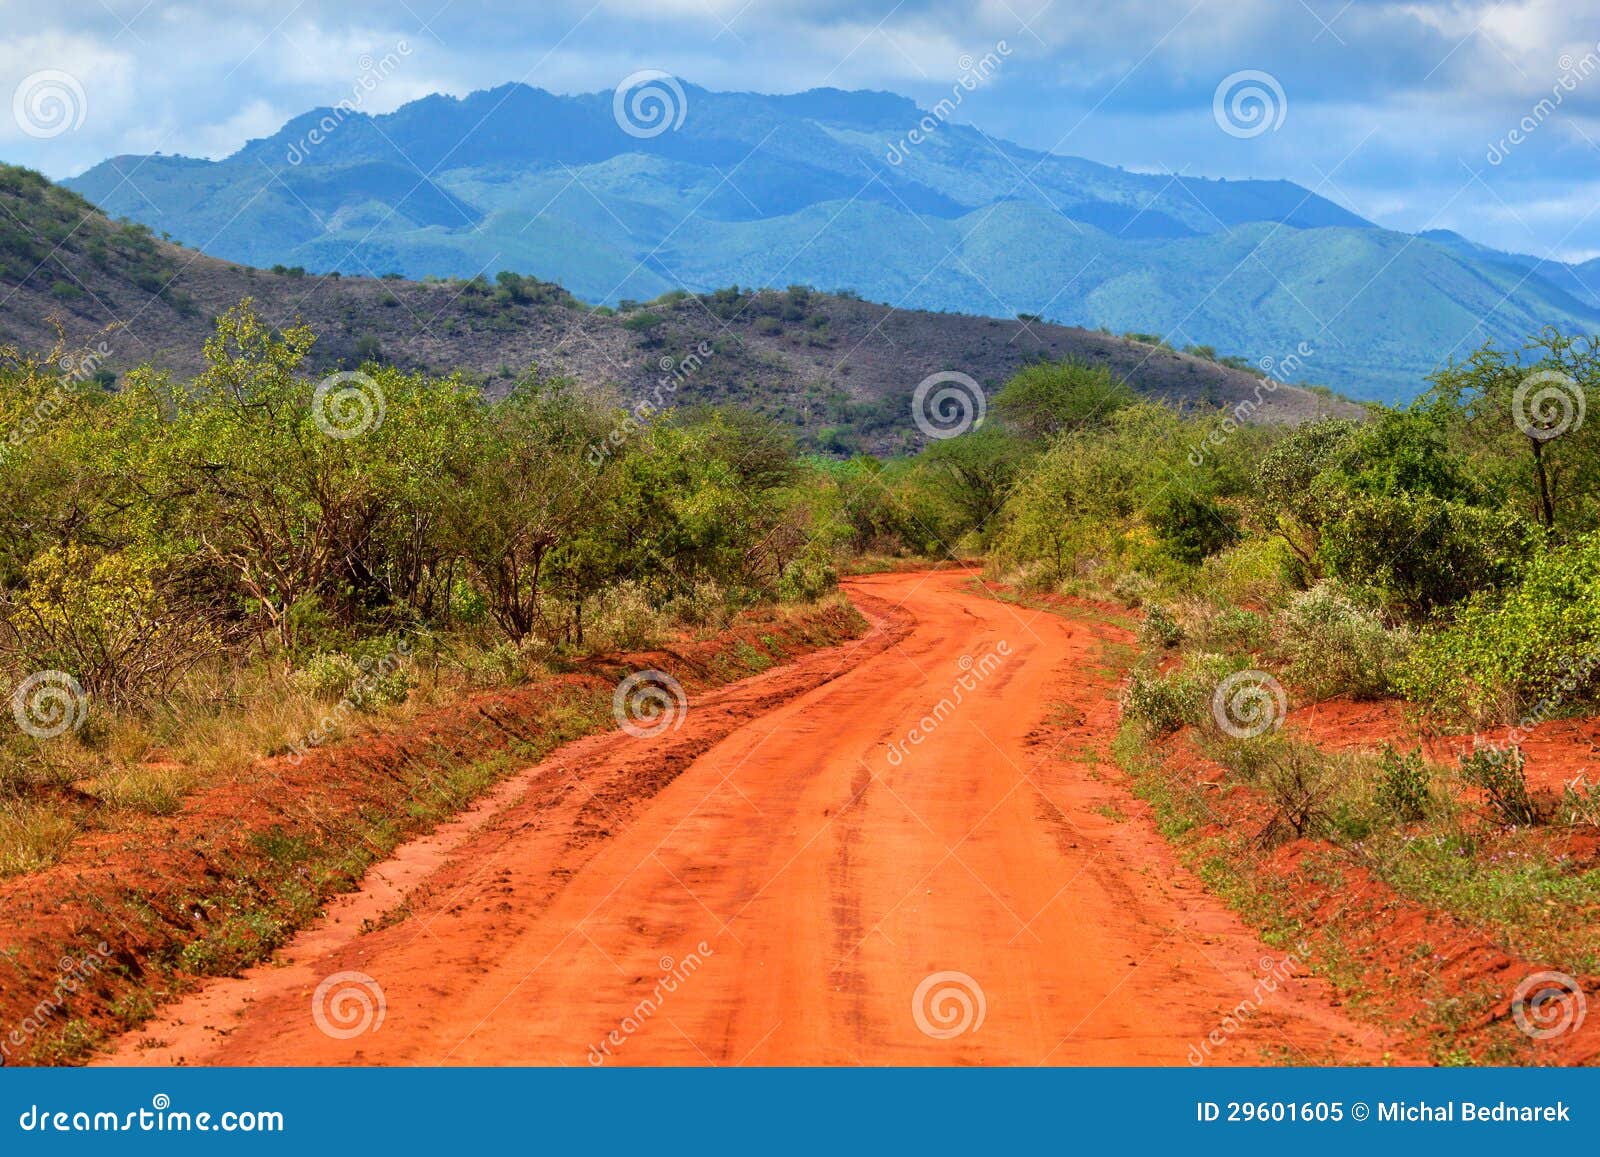 red ground road and savanna. tsavo west, kenya, africa